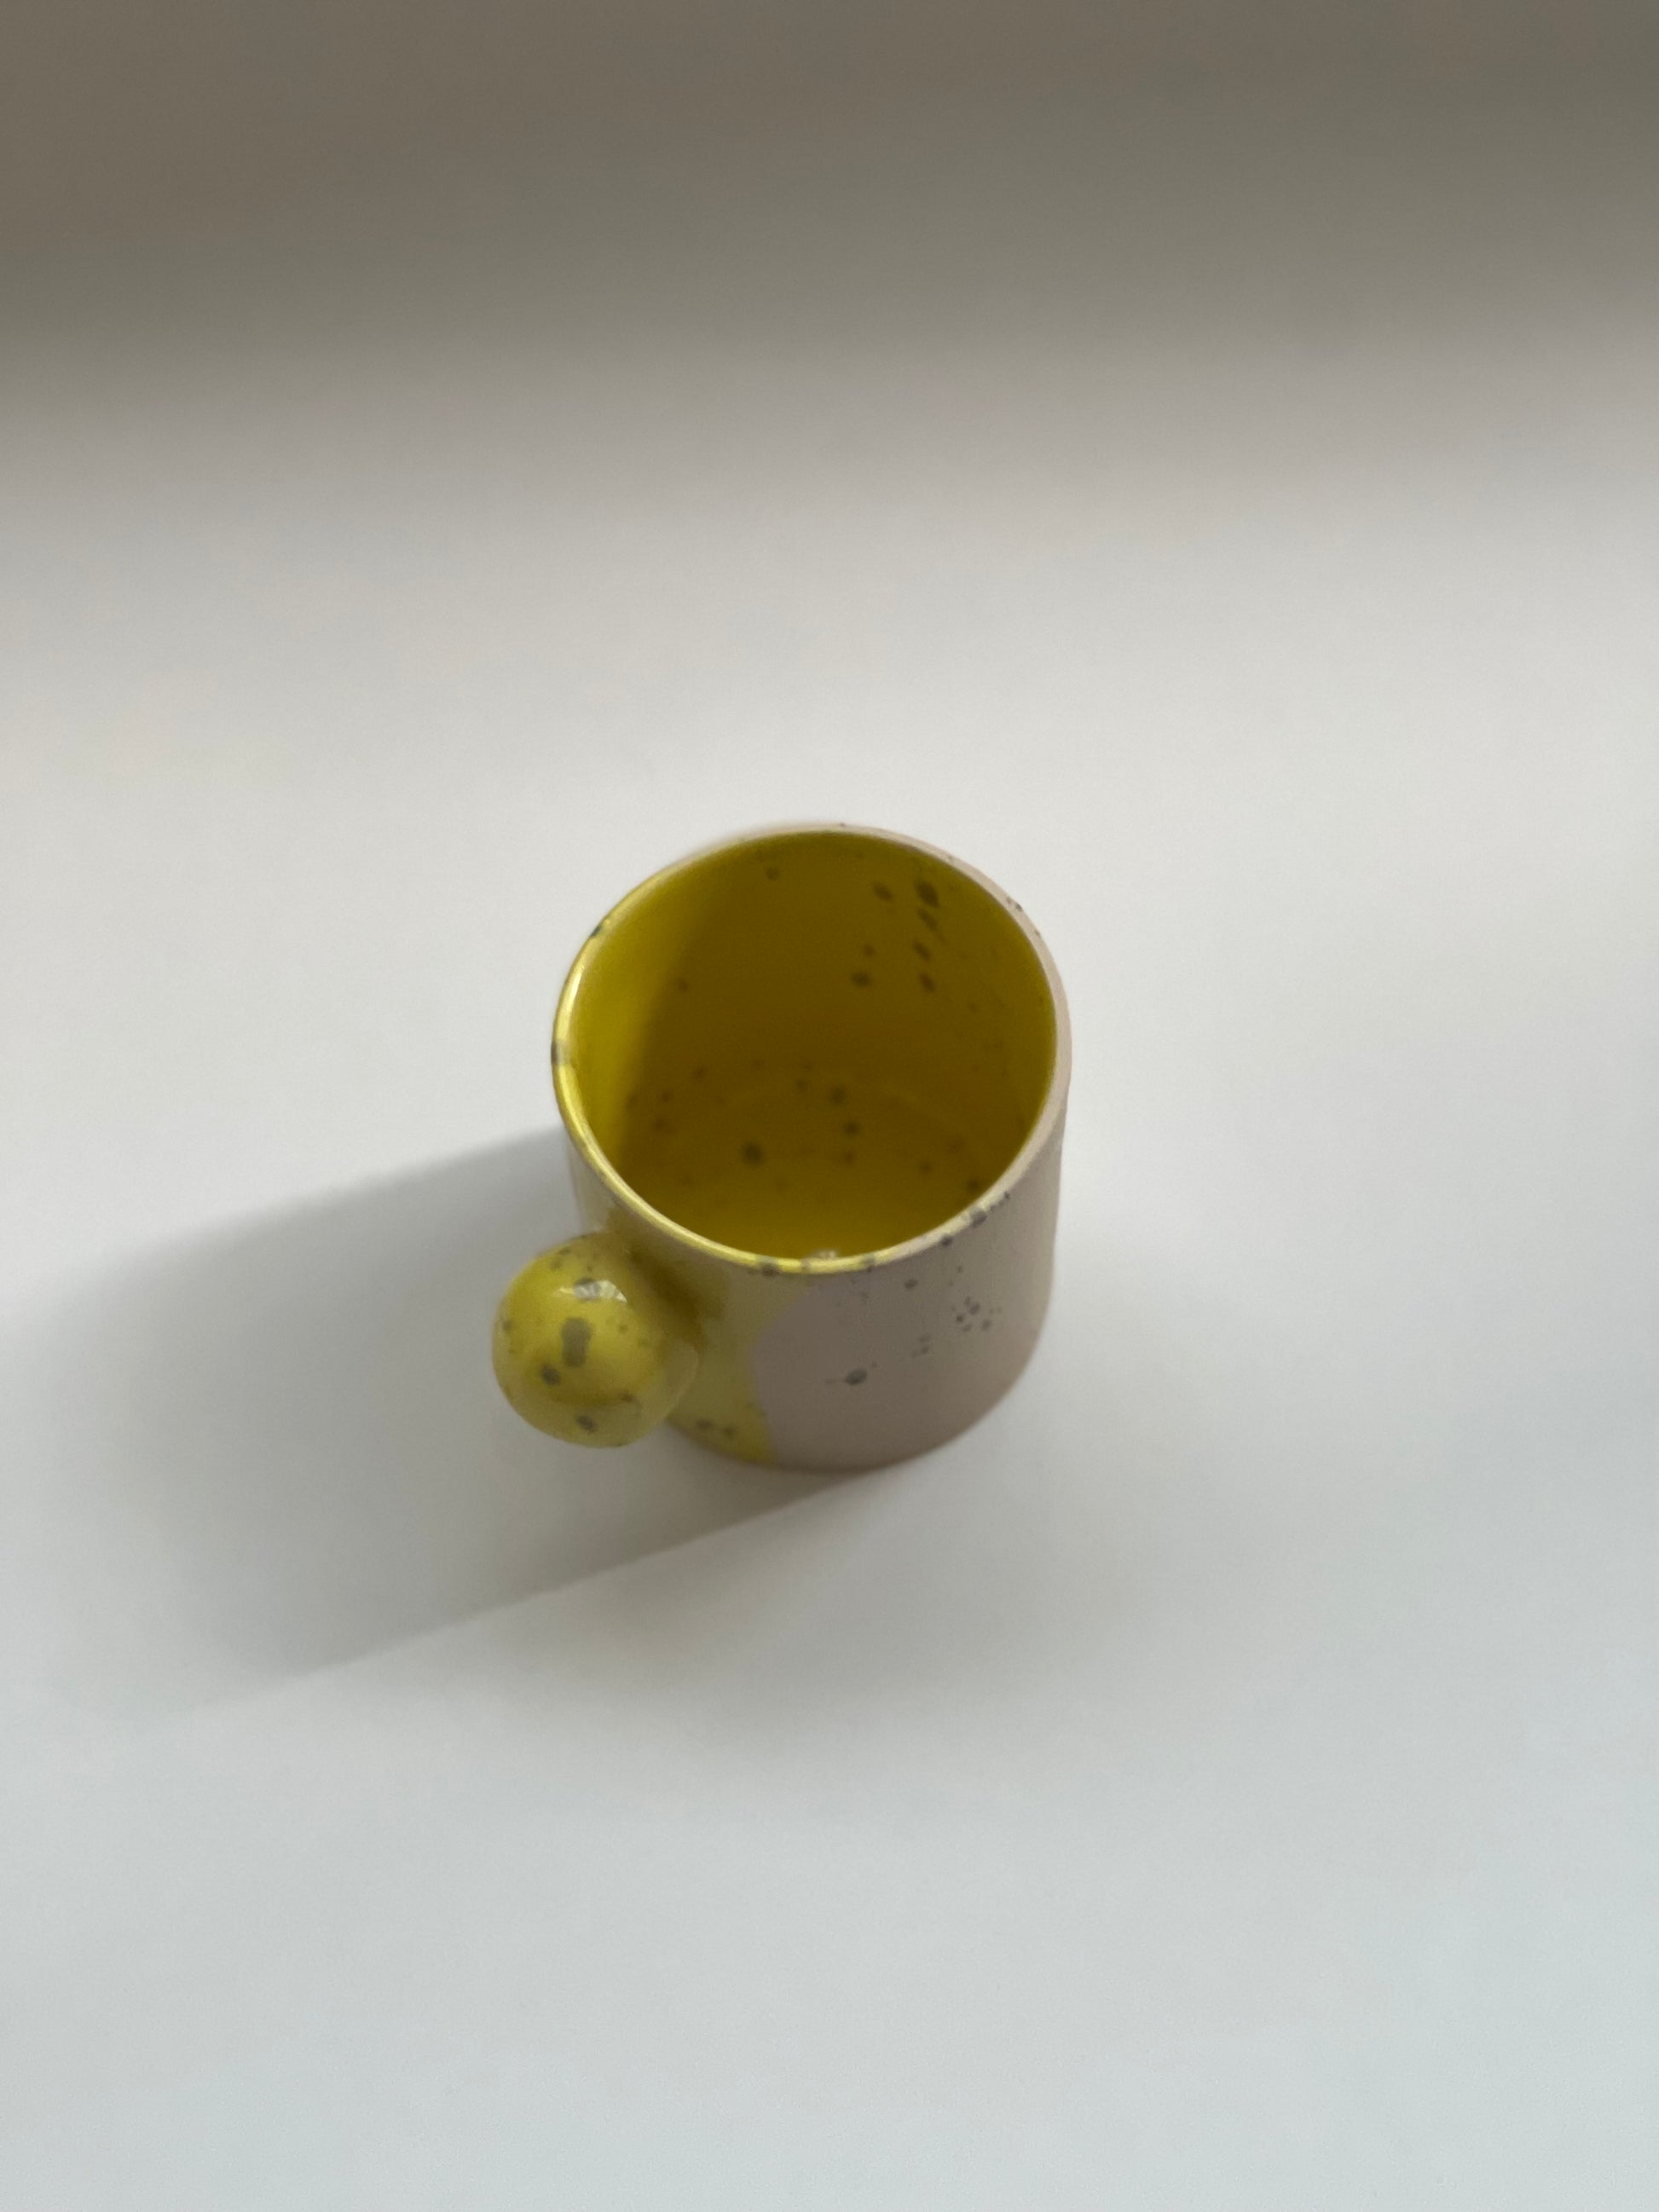 2 Oz / 4 Oz Speckle Espresso Cup, Espresso Tumbler, Handbuilt